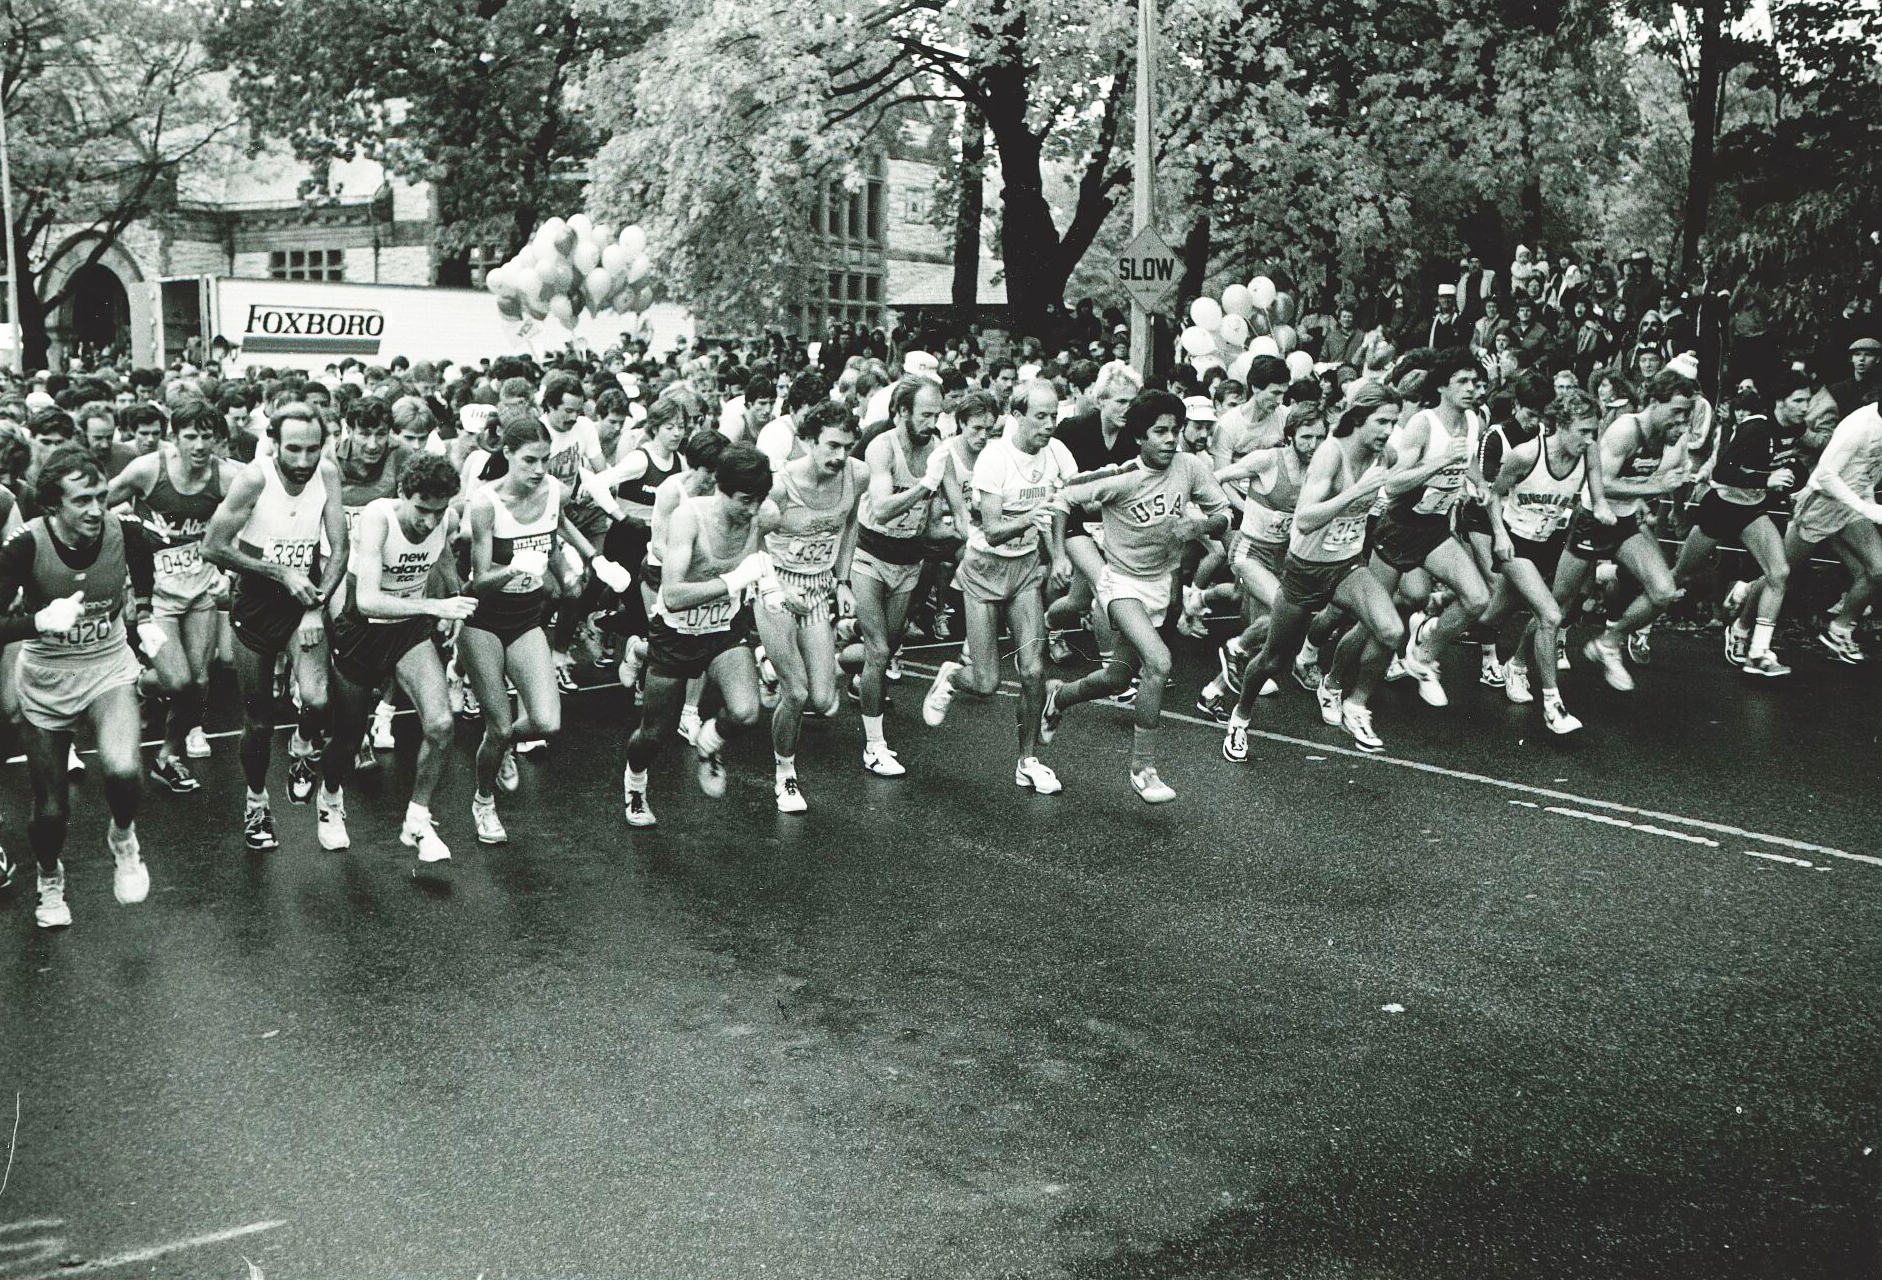 Heartbreak Hill Road Race benefiting Franciscan Children's in 1983.